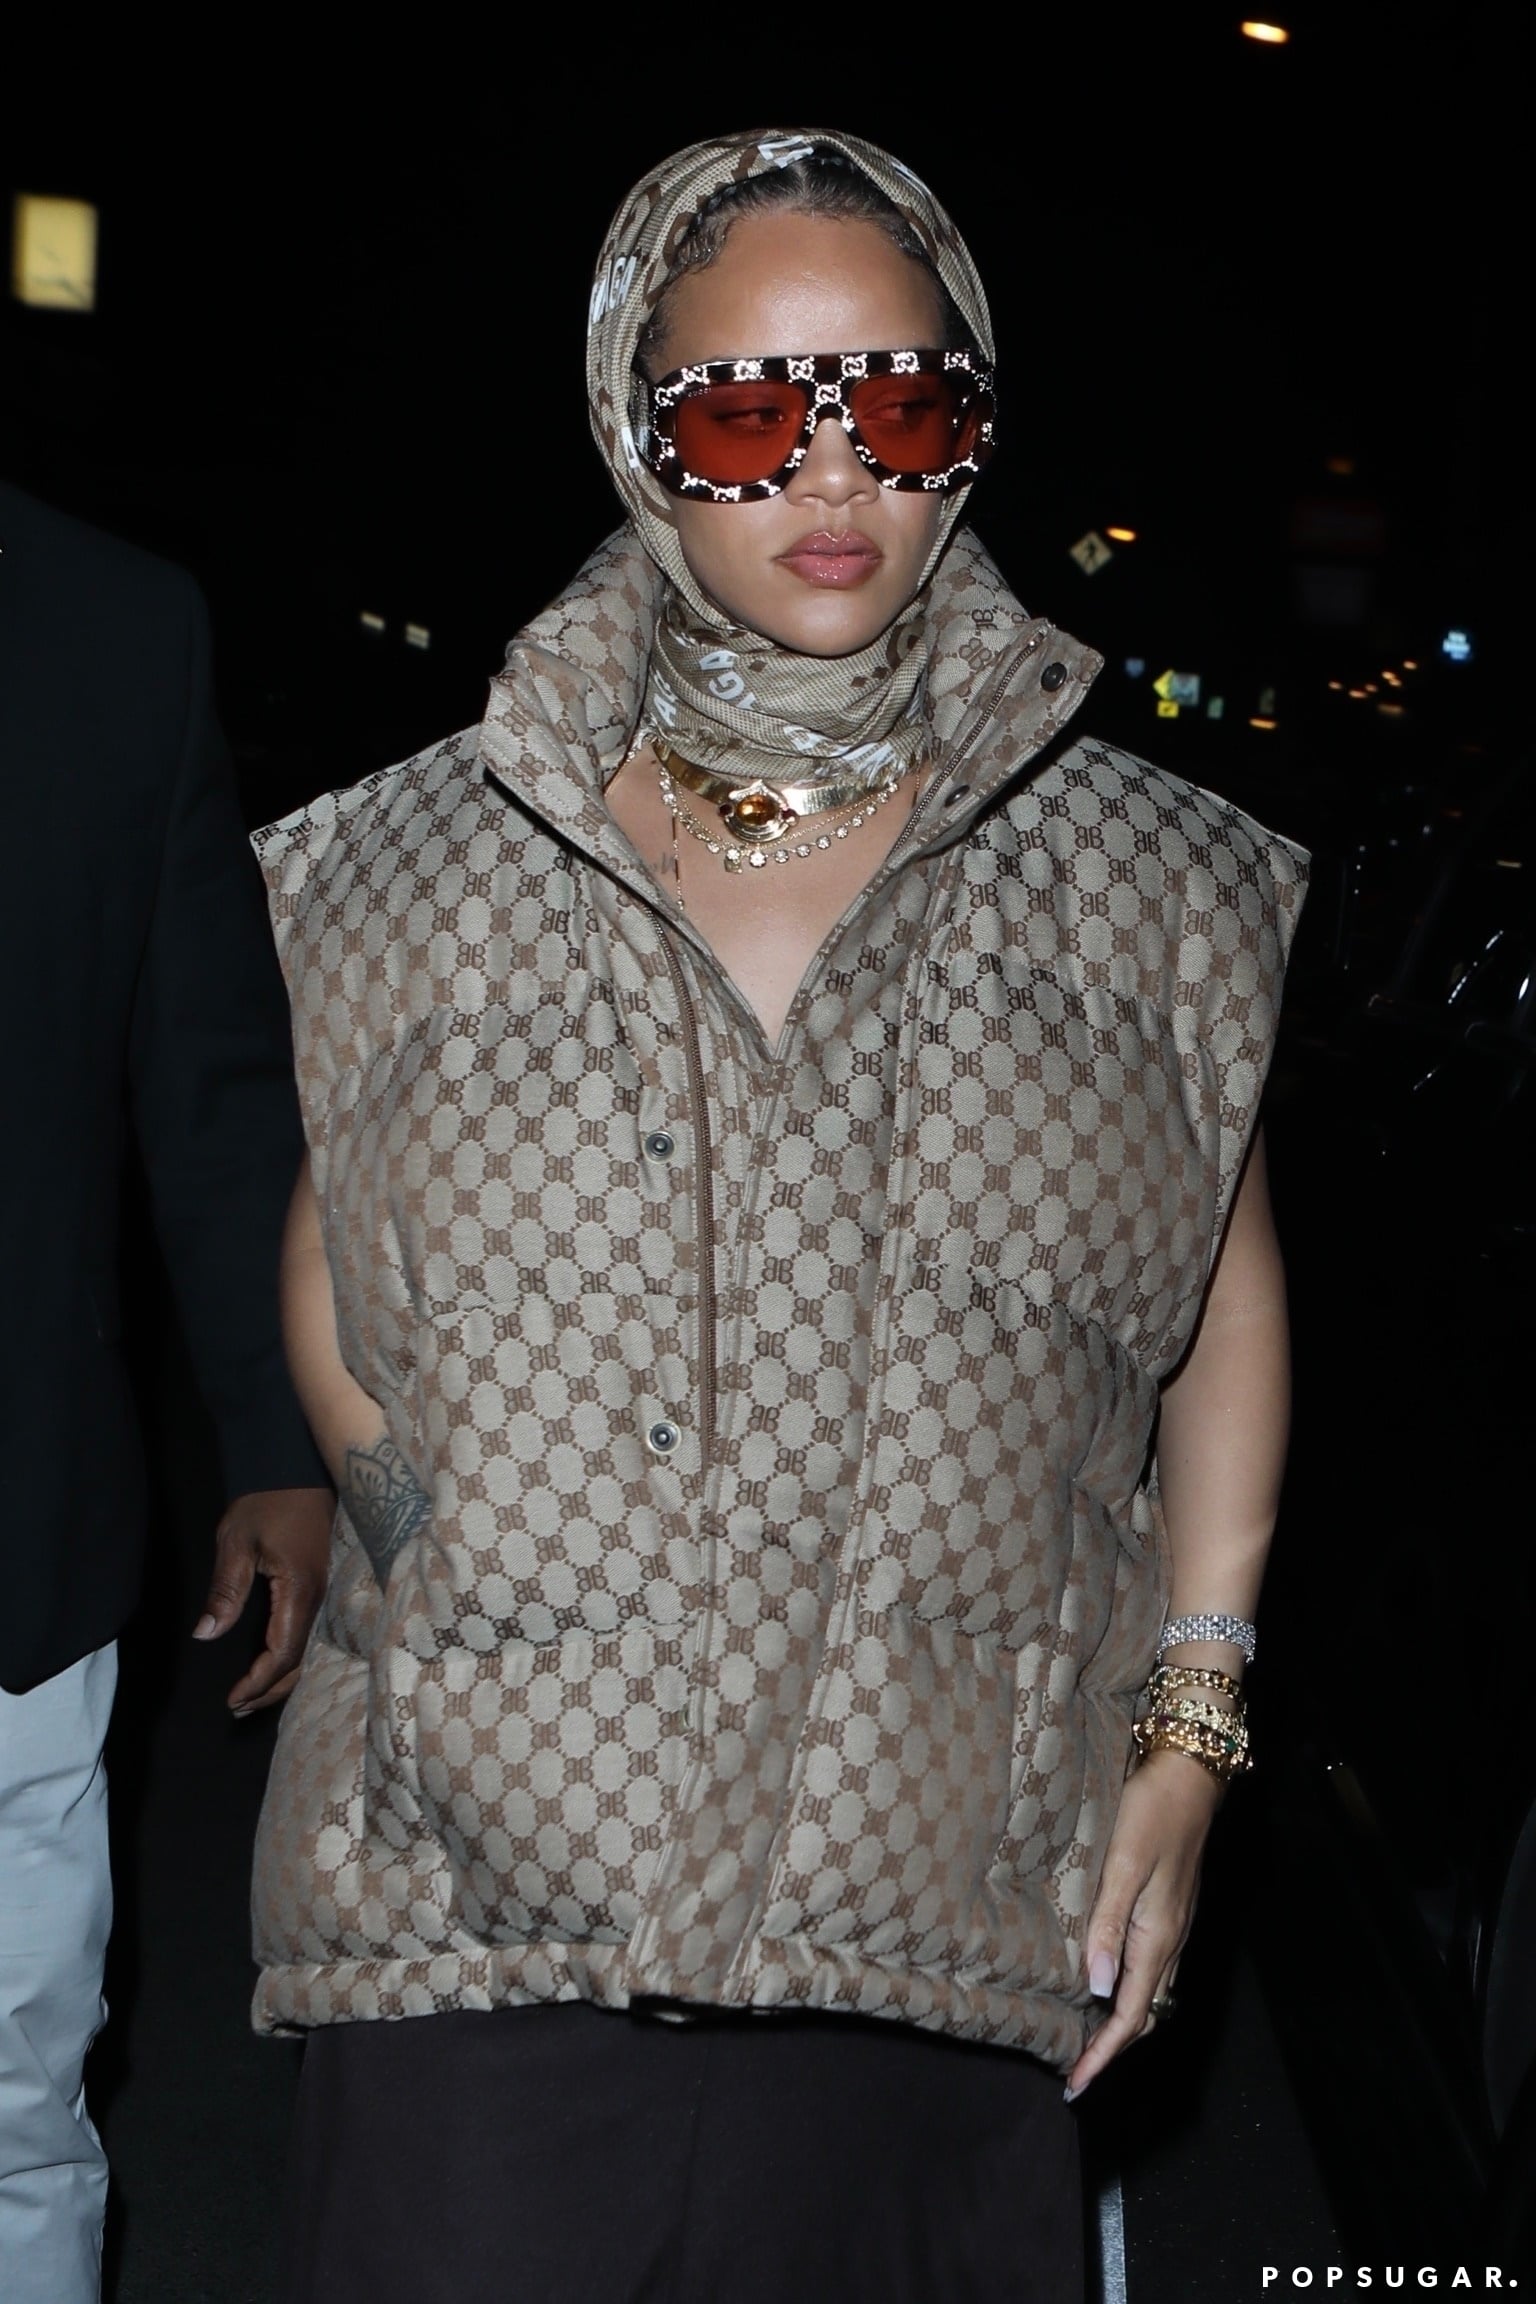 Bule Hilsen Næb Rihanna Wears Gucci x Balenciaga For Date Night | POPSUGAR Fashion